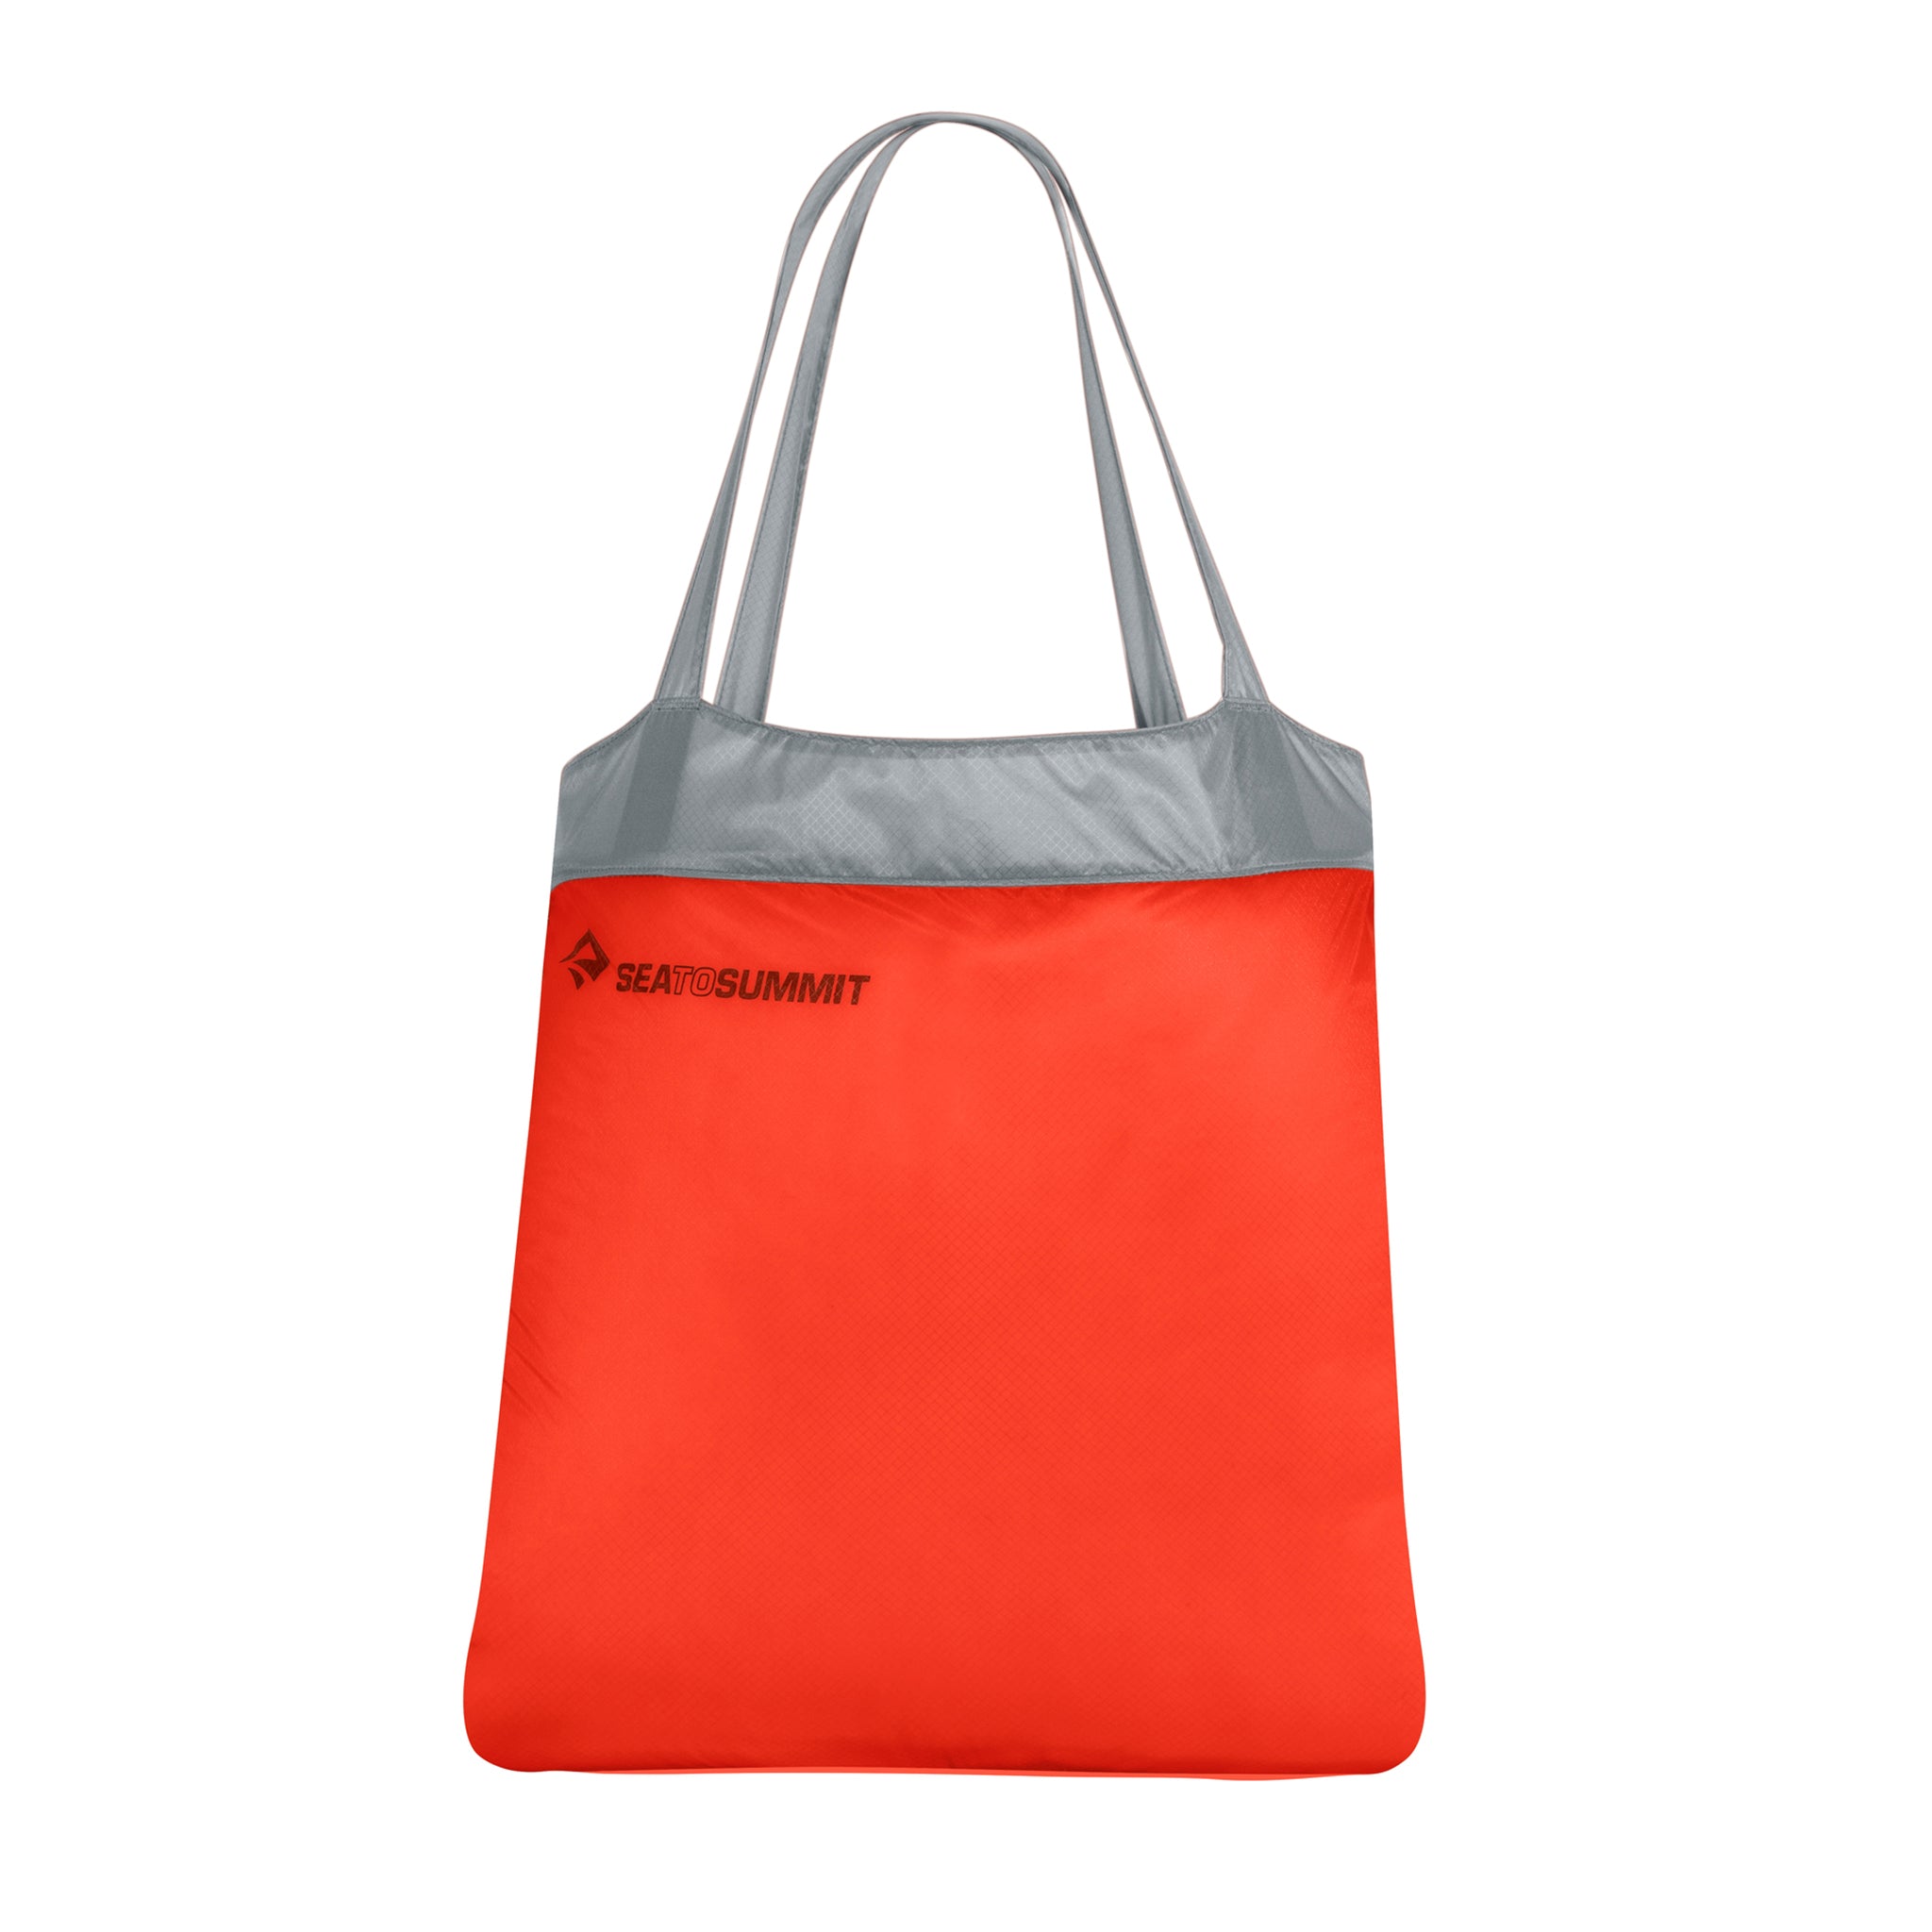 Ari” Salt Bag Strap  Bag straps, Bags, Strap